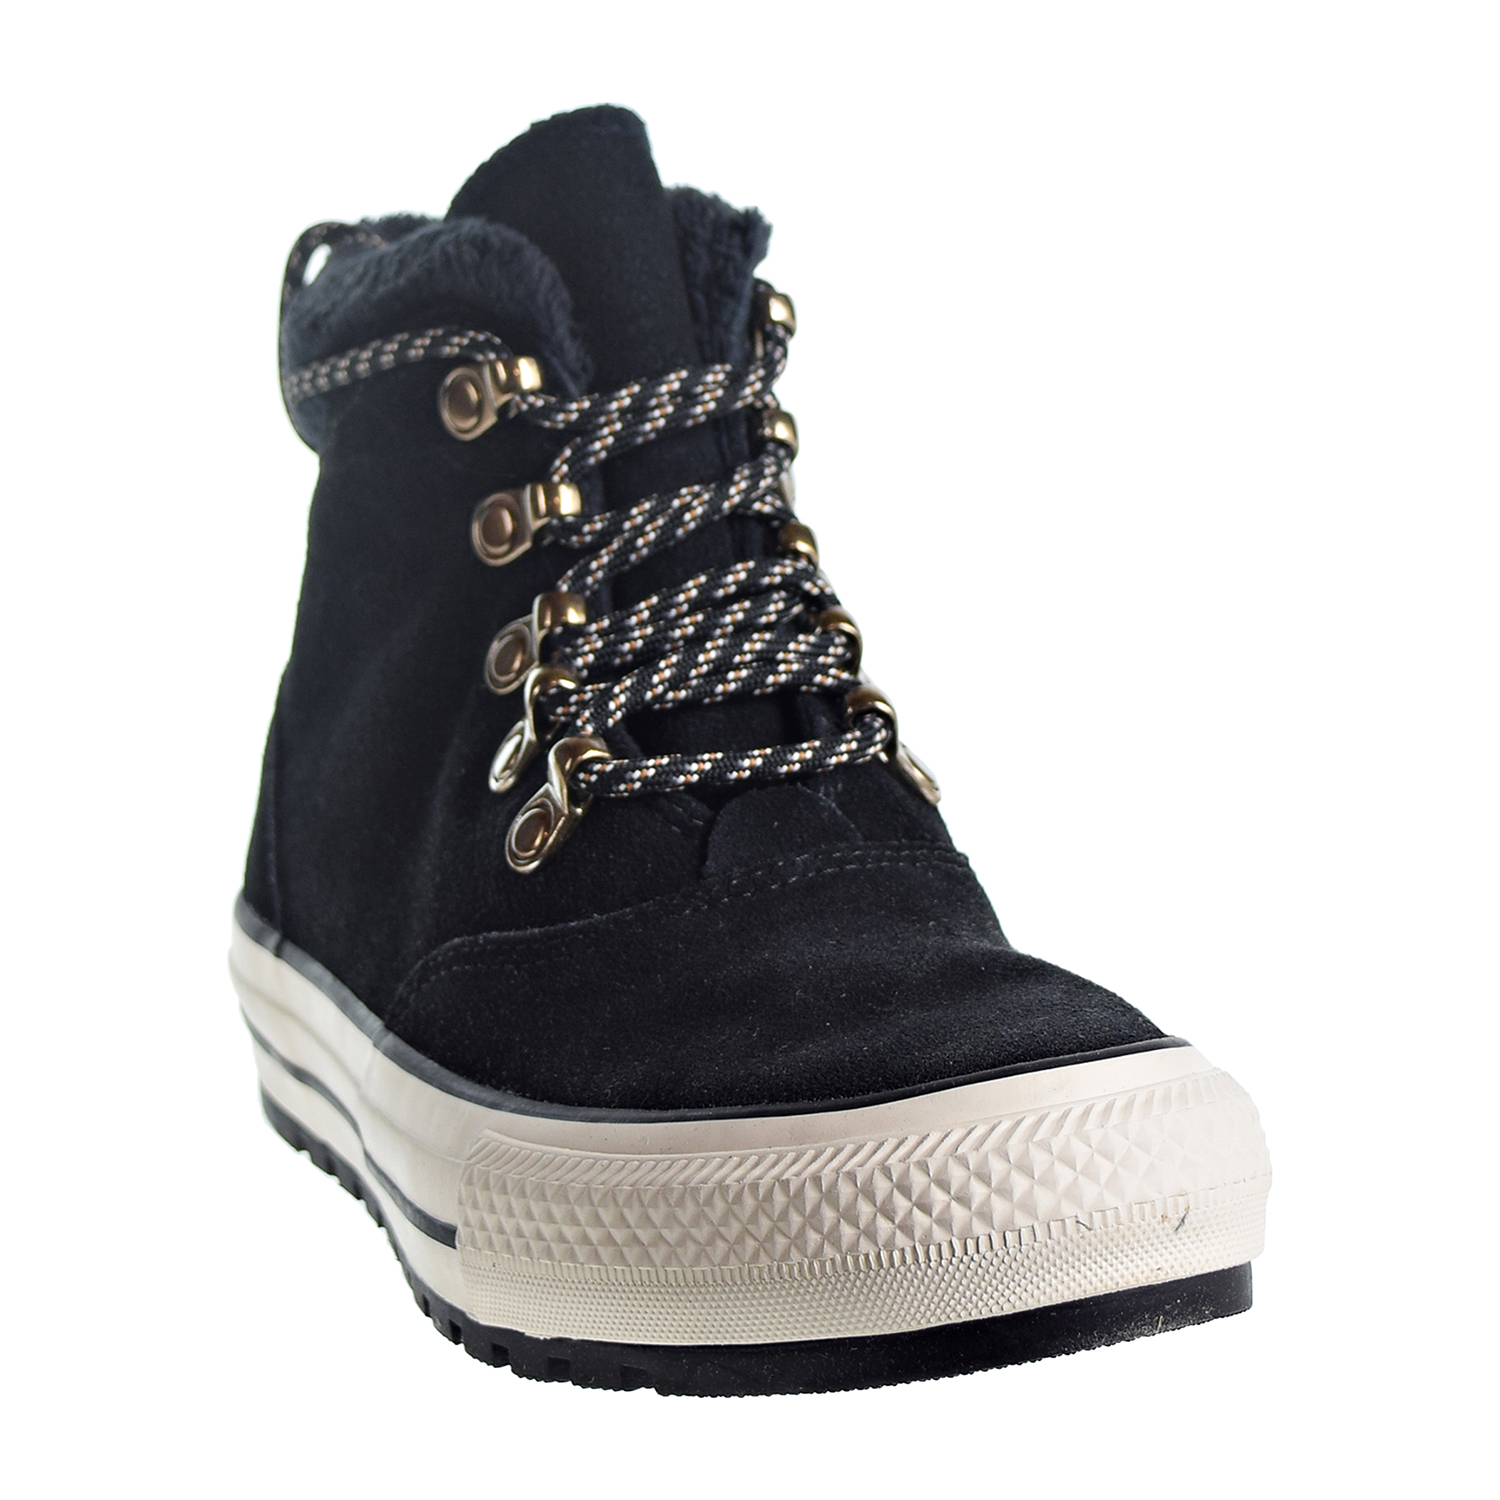 Converse Chuck Taylor All Stars Ember Boot Hi Women's Shoes Black/Egret 557935c